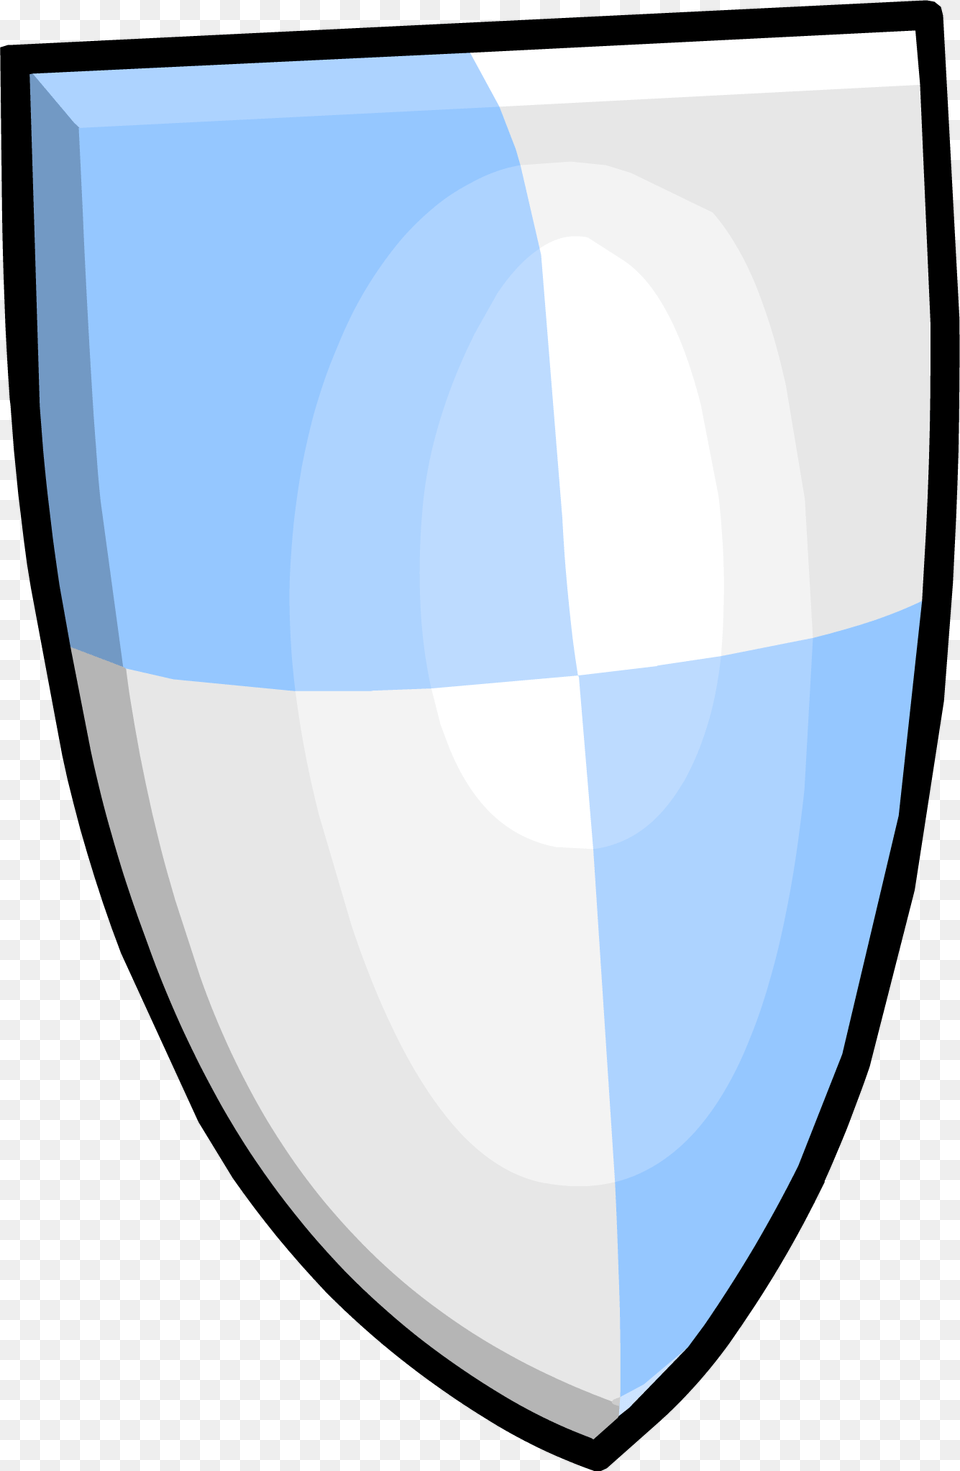 Club Penguin Rewritten Wiki Circle, Armor, Shield Free Transparent Png